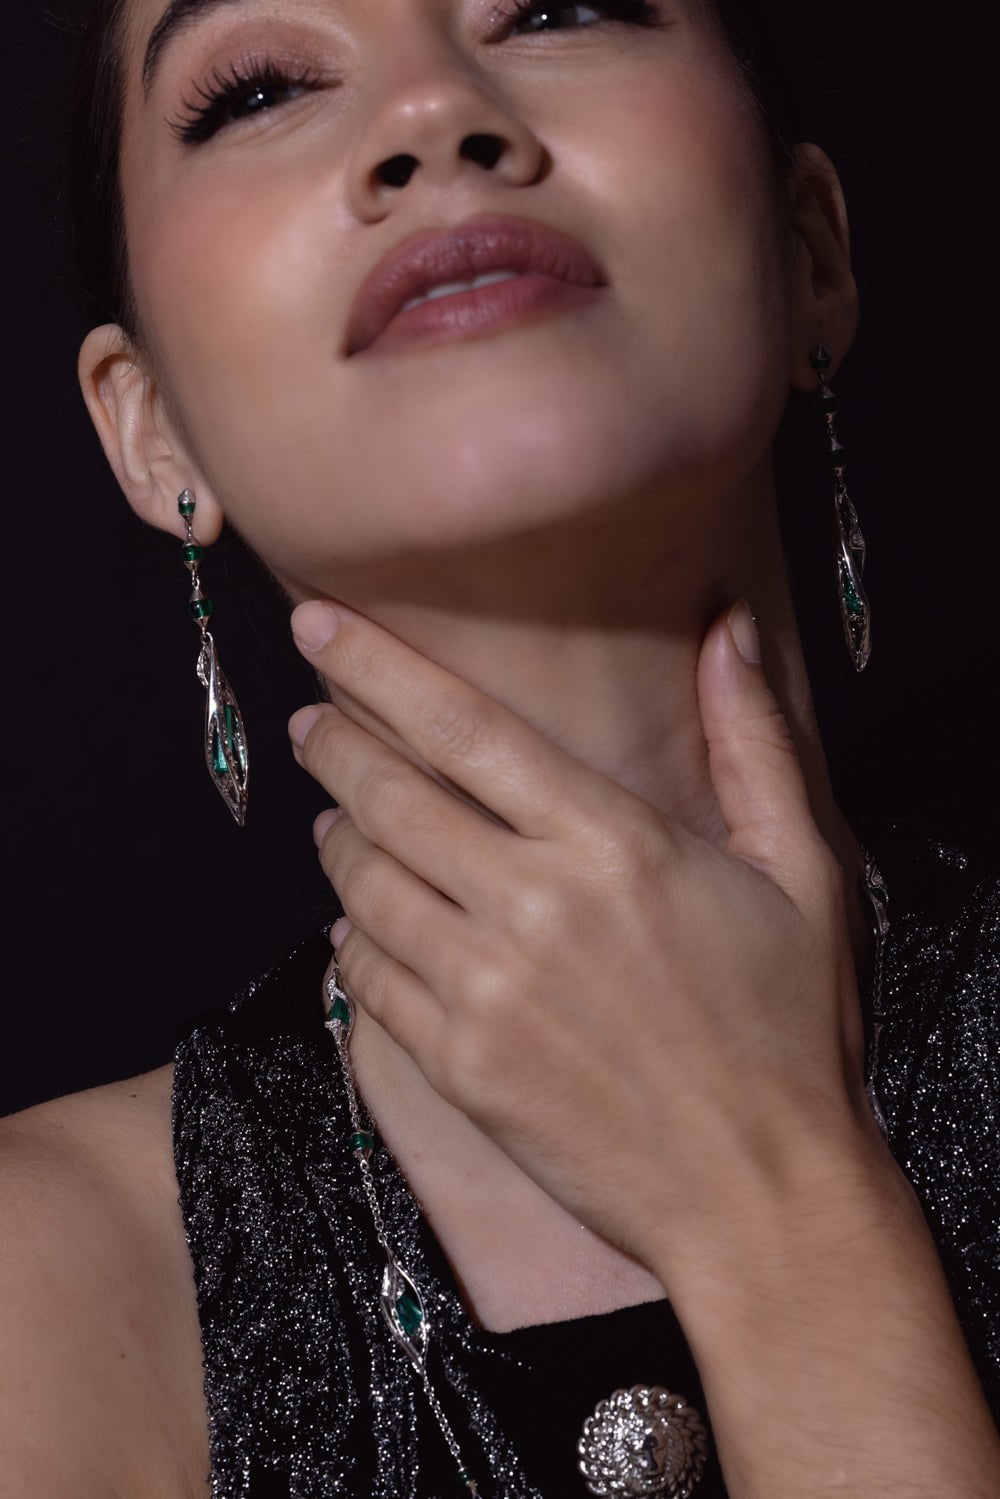 Emerald Tube Drop Earrings JEWELRYFINE JEWELEARRING SABOO FINE JEWELS   